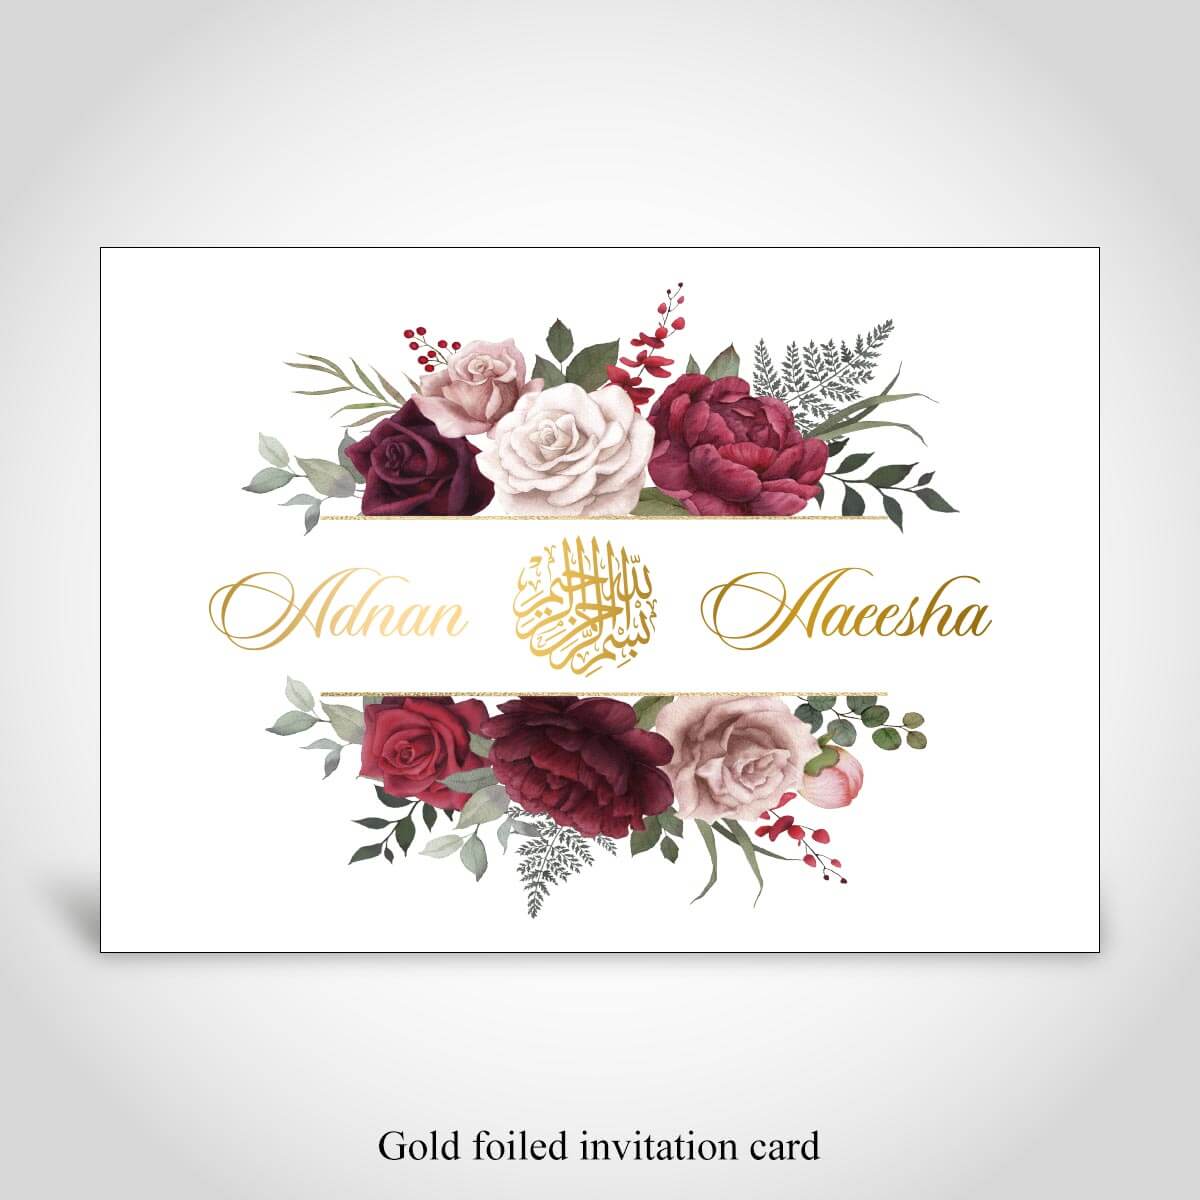 Islamic Wedding Cards: Tips for designing unique Muslim wedding invitations CardFusion